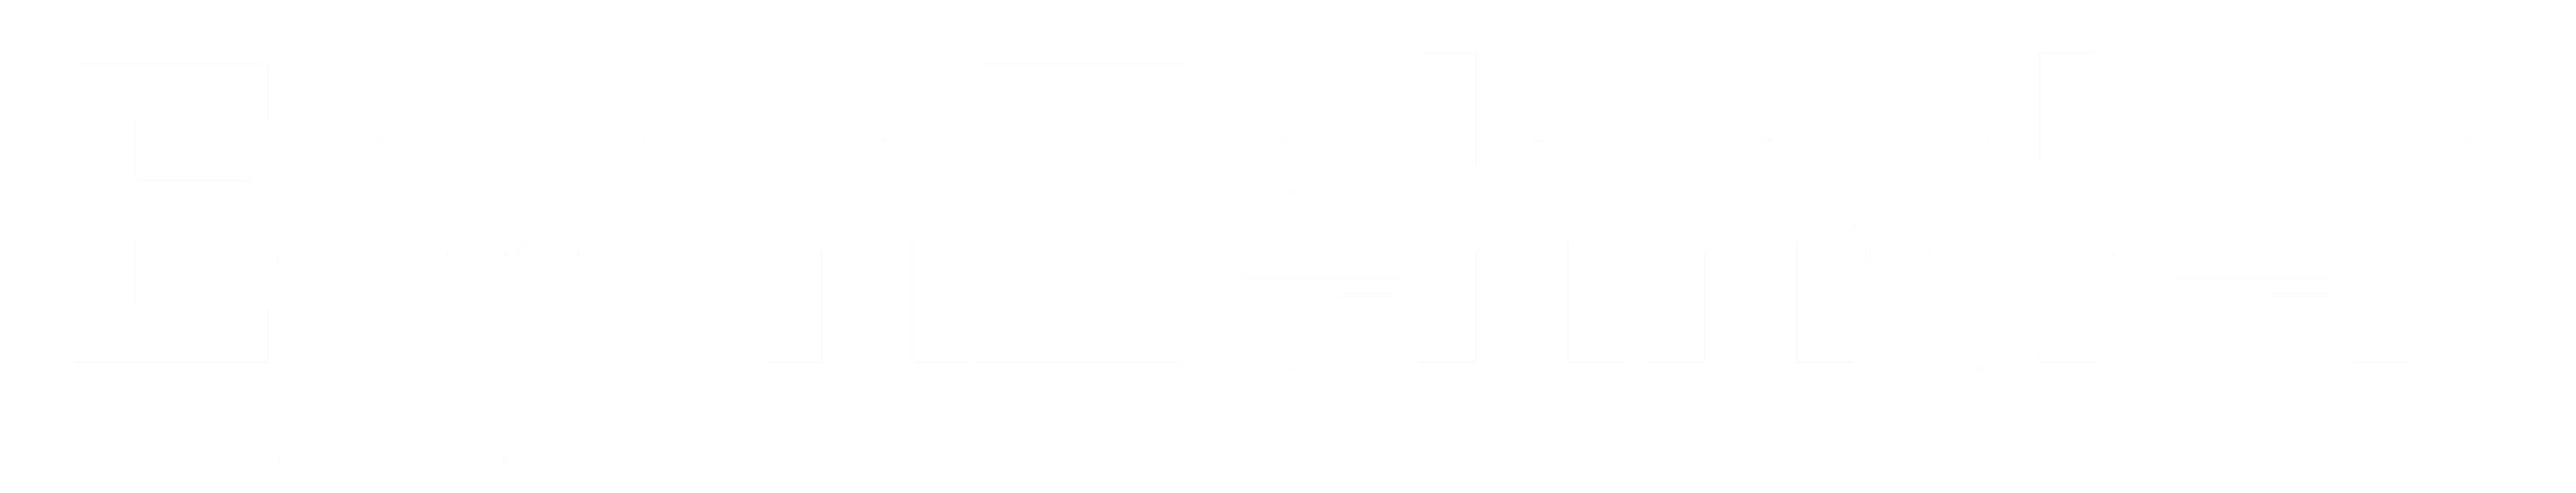 Egon Zehnder Alumni Network